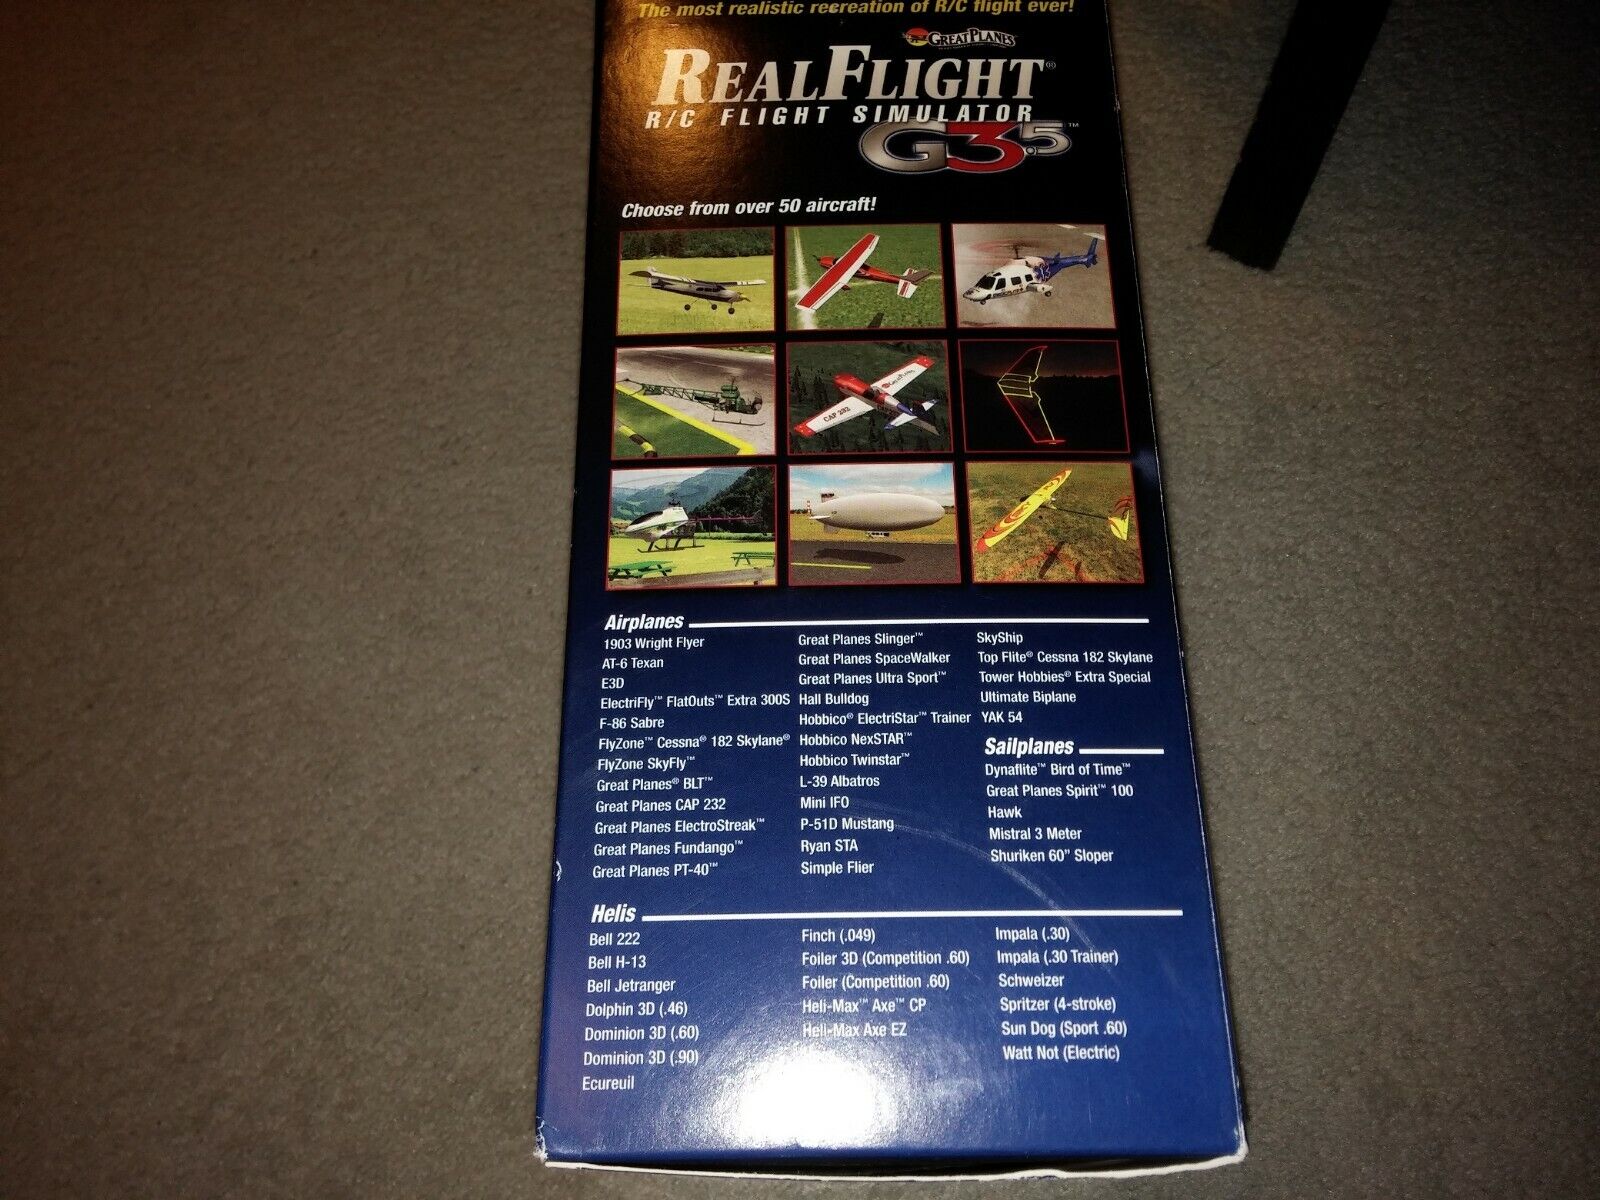 Real Flight RC Simulator G3.5 RealFlight R/C 3D Controller Futaba Sealed New Box RealFlight Does Not Apply - фотография #8